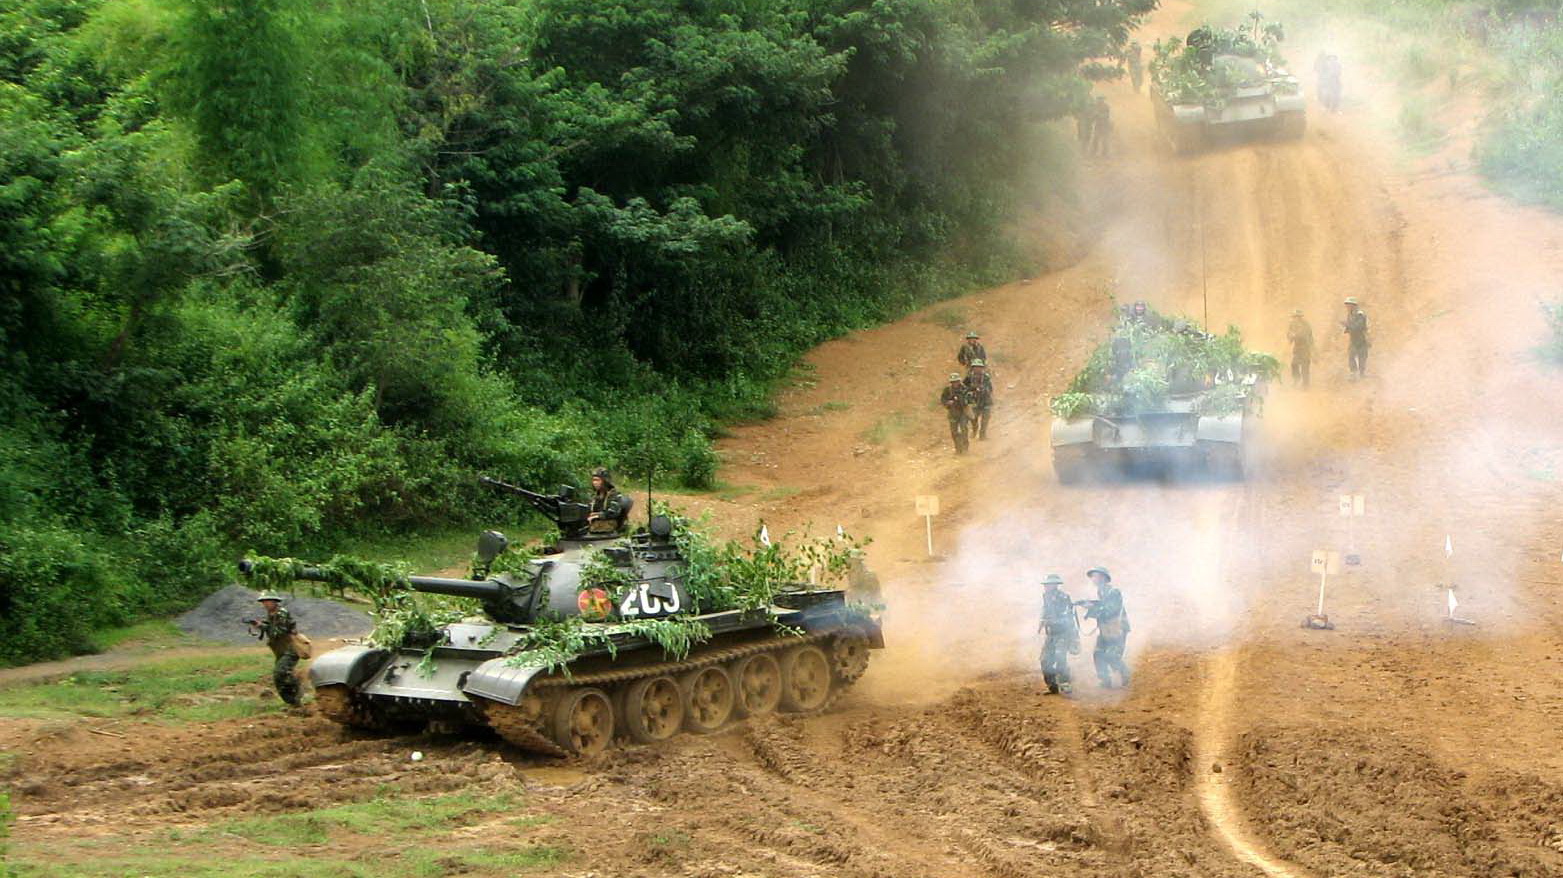 ‘Made in Vietnam’ explosive reactive tank armors